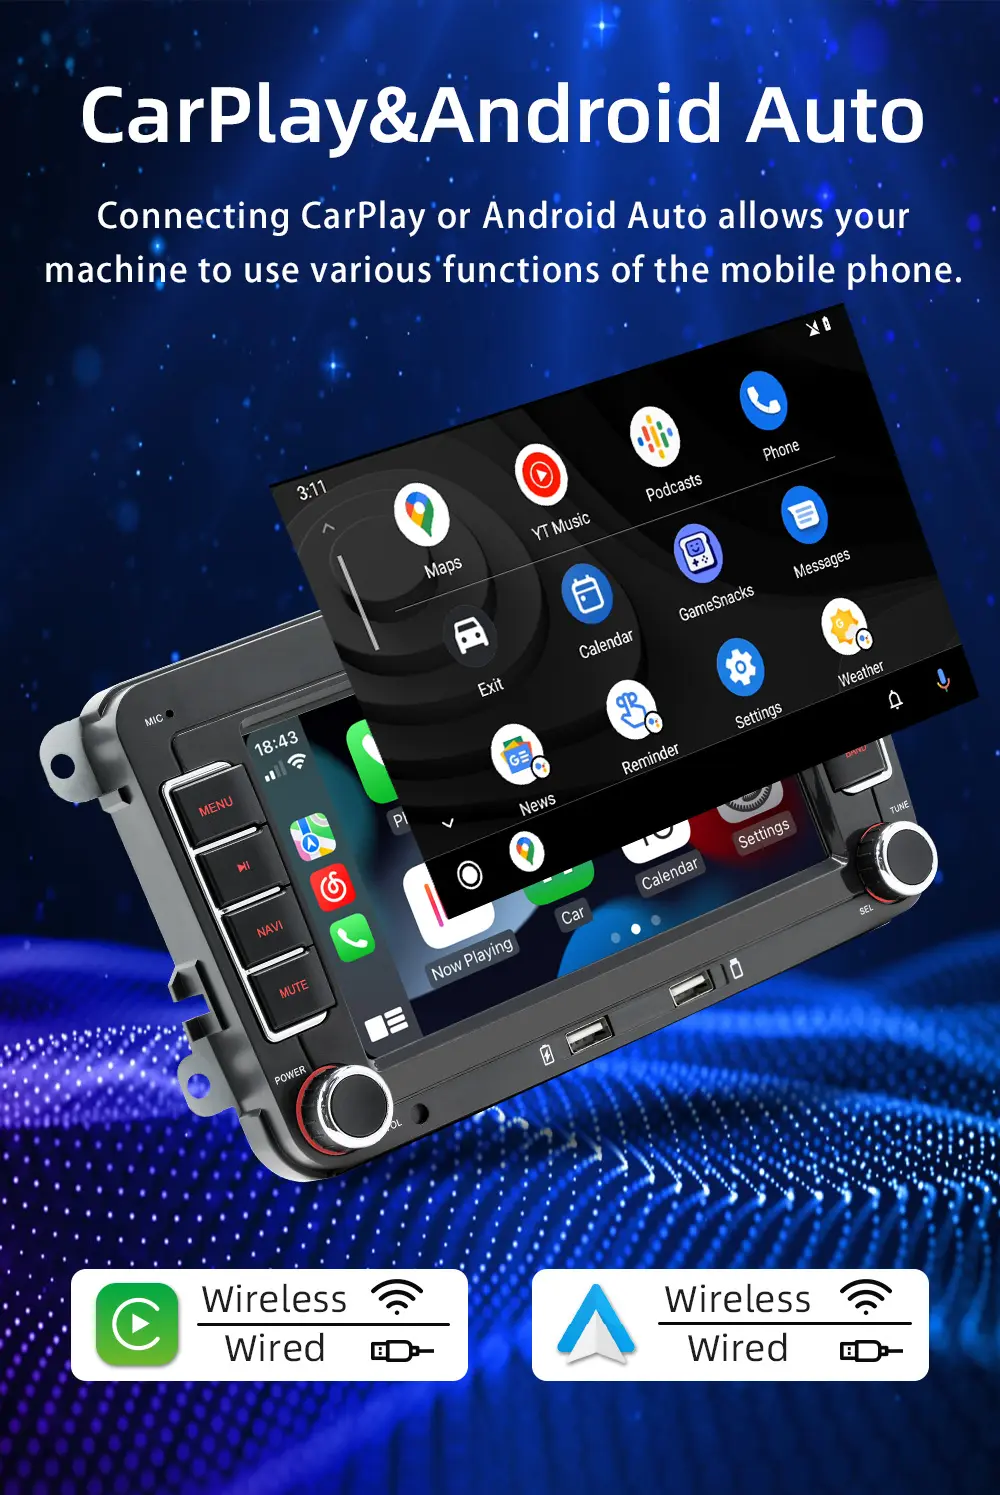 BQCC 7 "2din Autoradio Wireless Carplay 2USB Android GPS Navigation Wifi Für Volkswagen Skoda Sitz Passat B7 Polo VW Golf 5 6